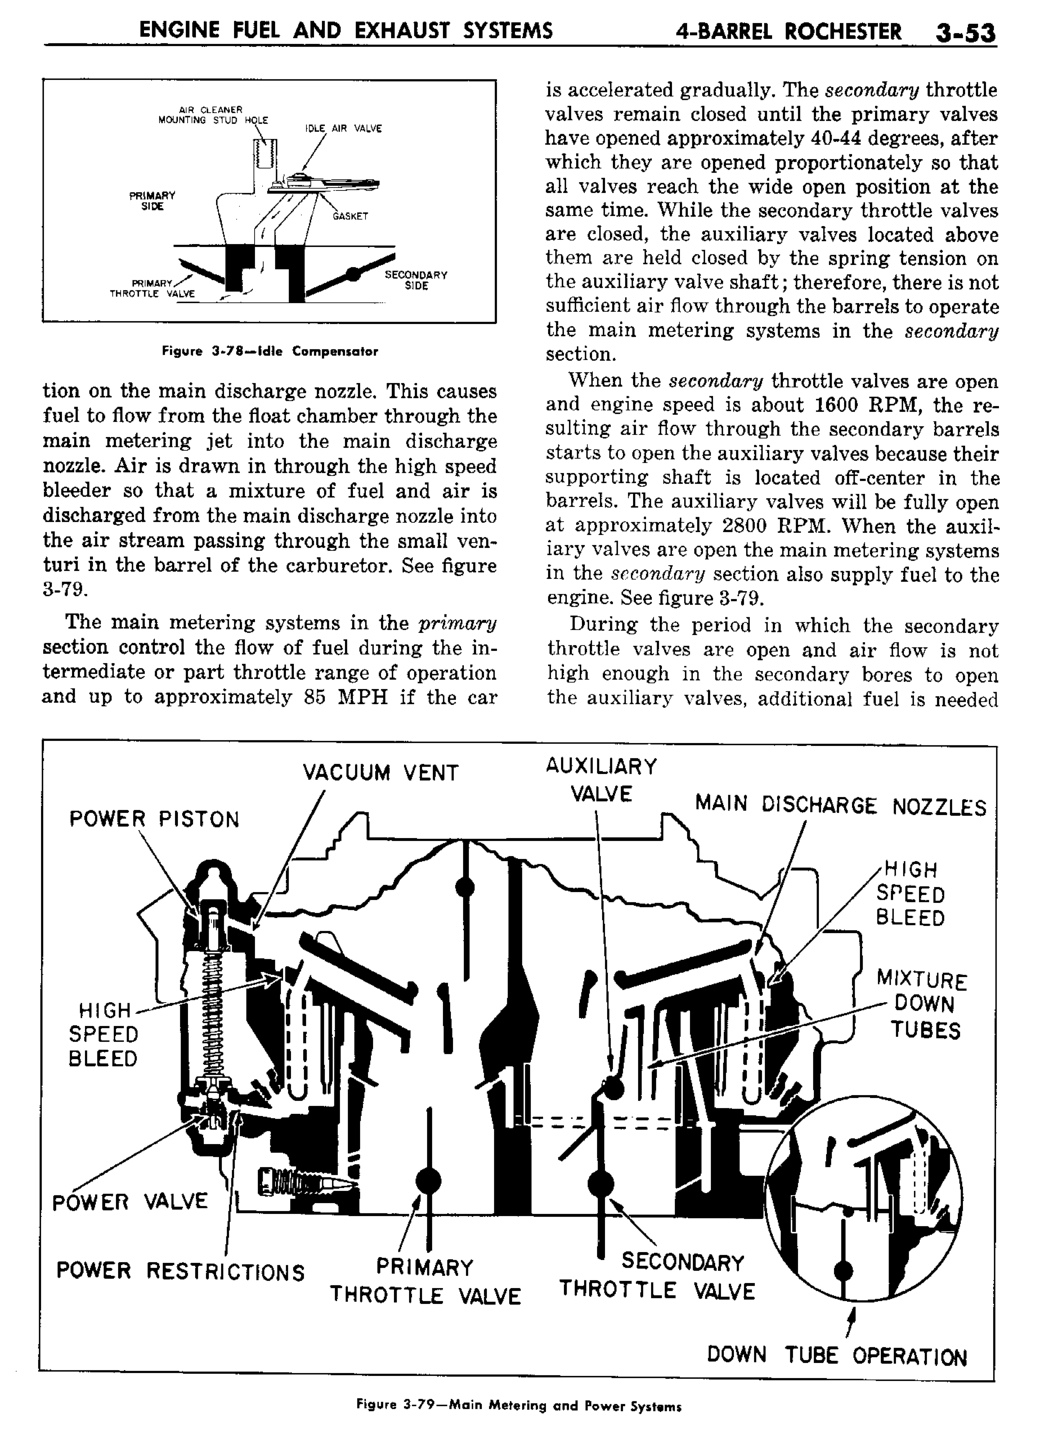 n_04 1960 Buick Shop Manual - Engine Fuel & Exhaust-053-053.jpg